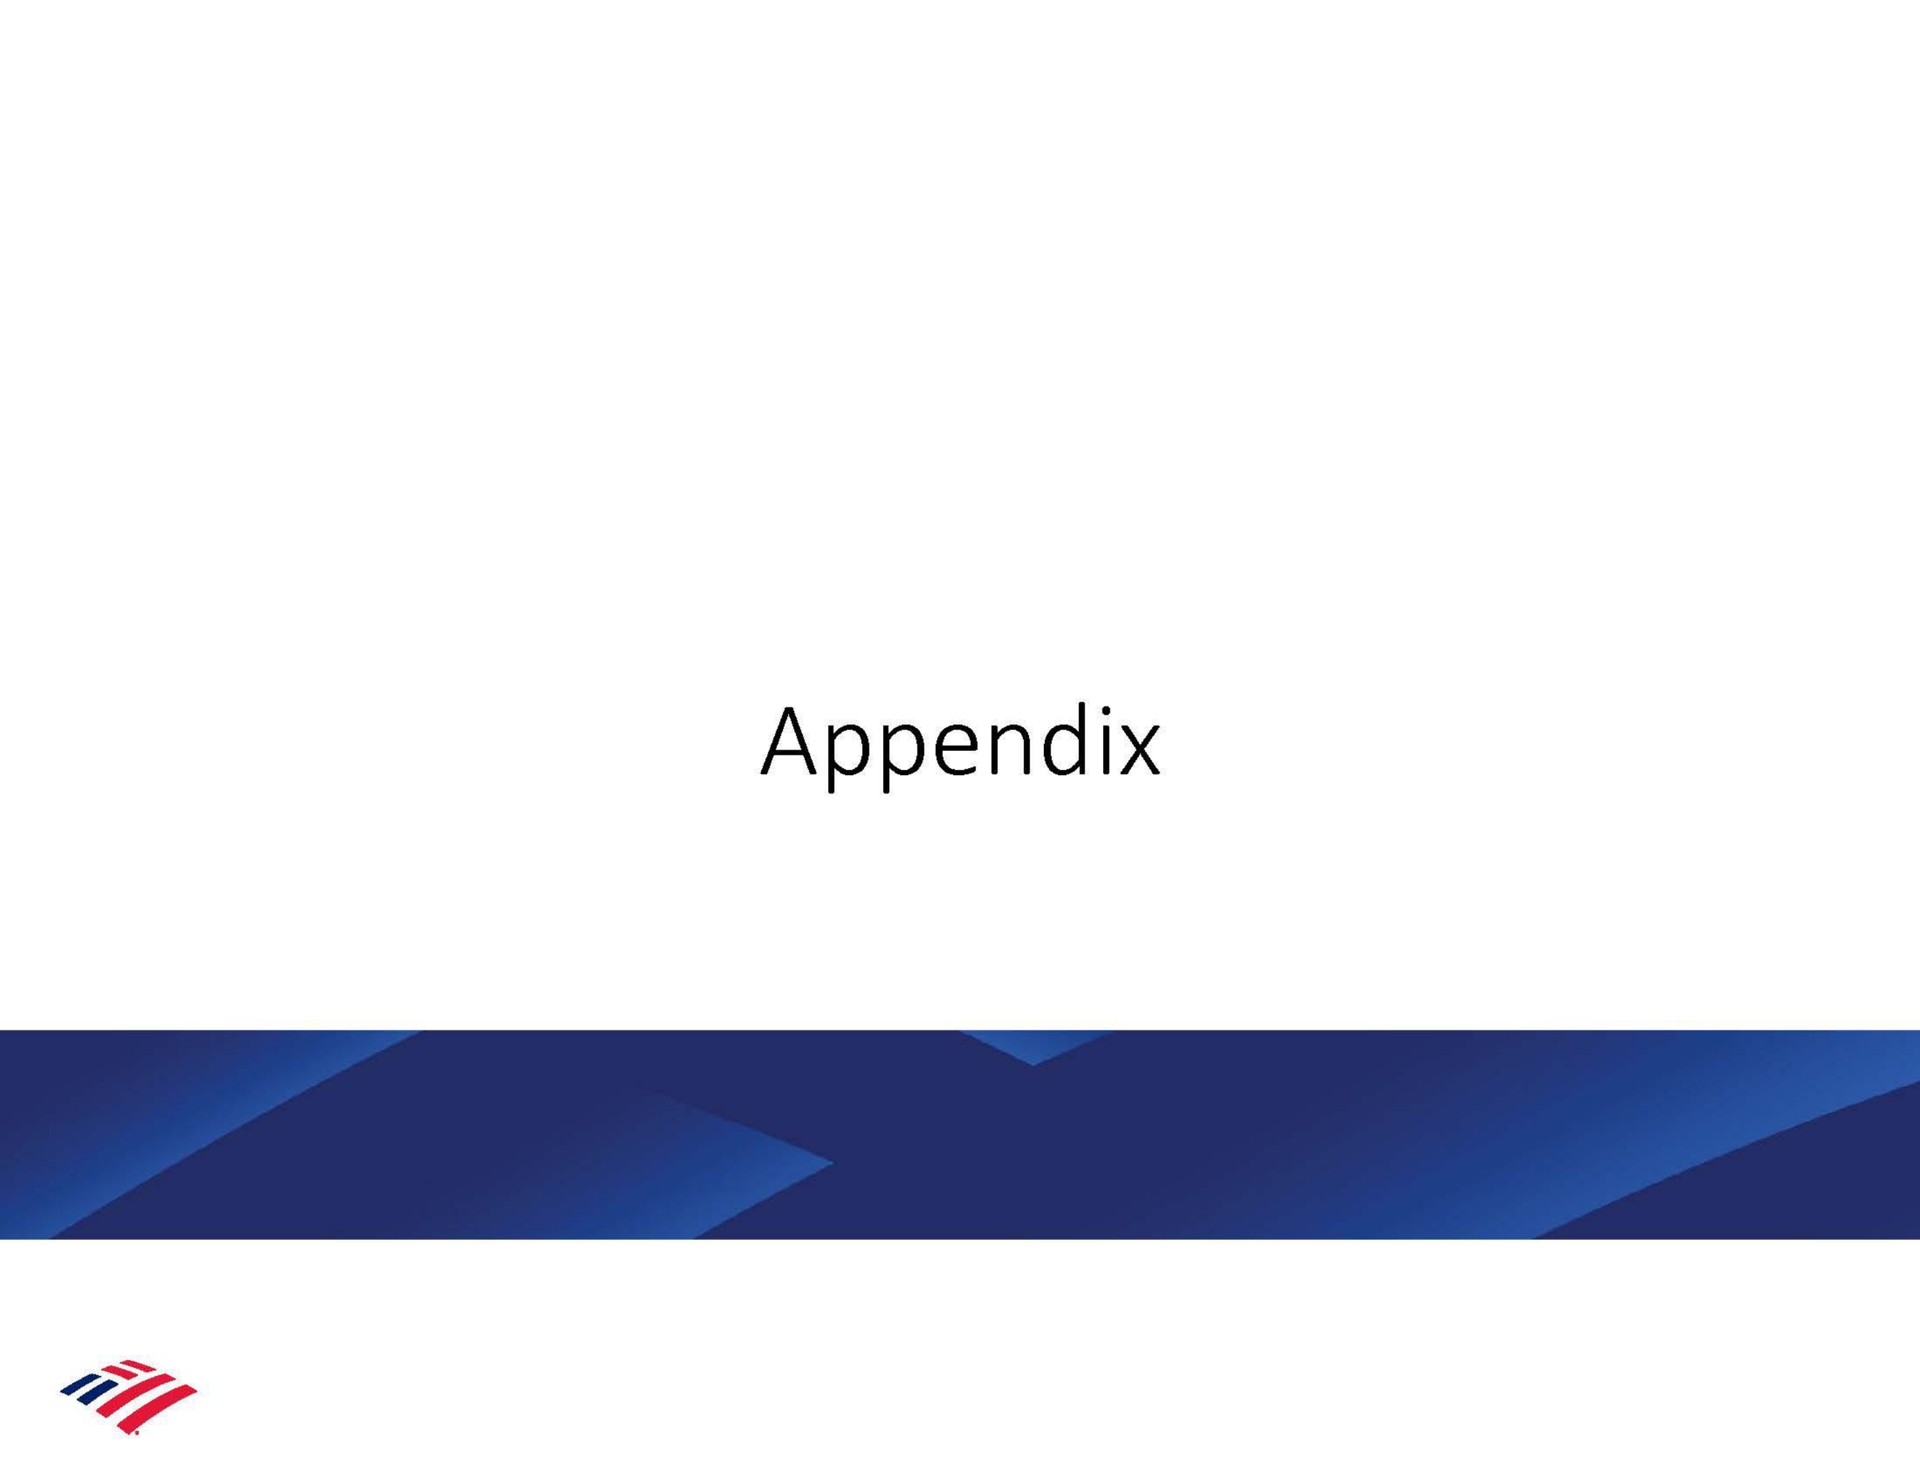 appendix | Bank of America